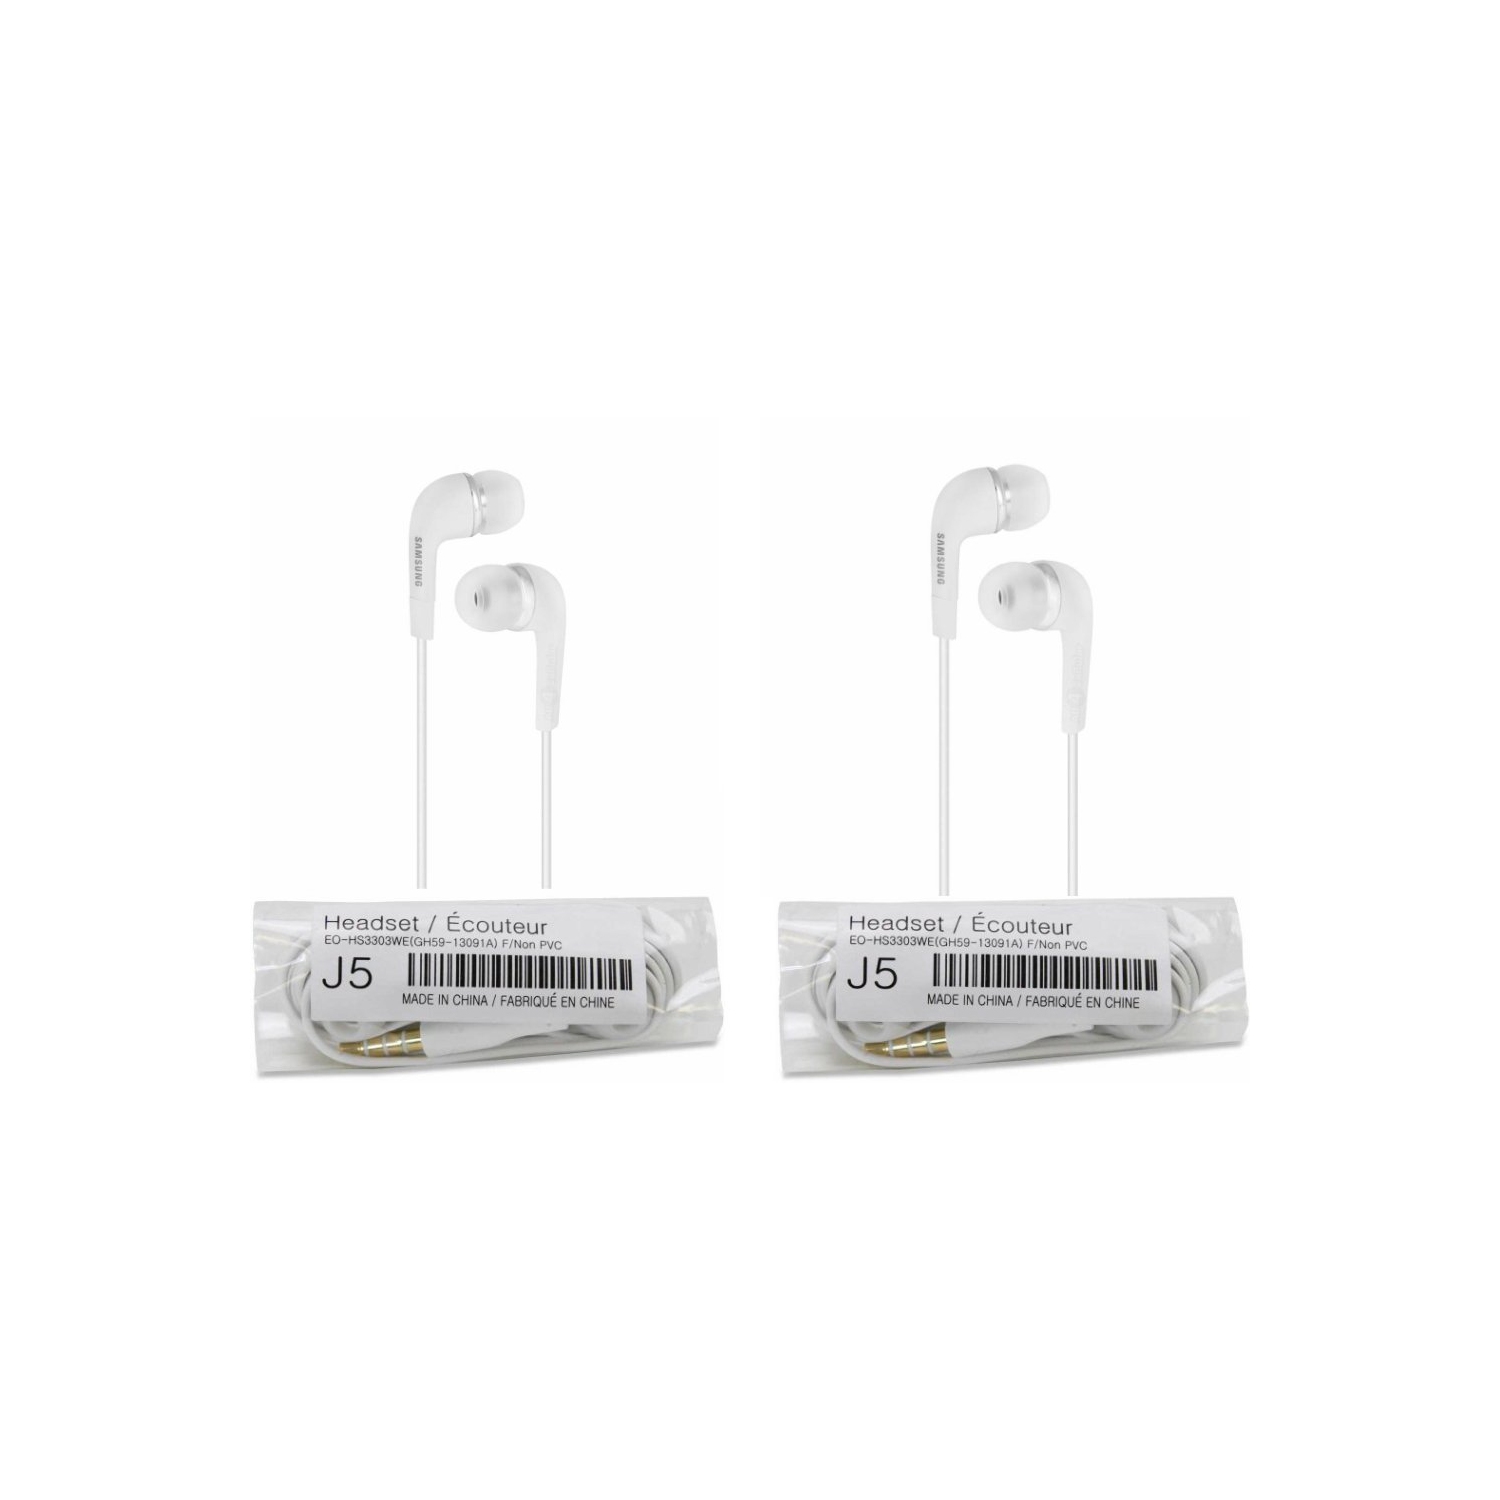 SAMSUNG EARPHONES HEADPHONES HEADSET FOR GALAXY S5 S4 S3 S2 NOTE 1 2 3 J1 J3 J5 J7 A3 A5 3.5mm JACK